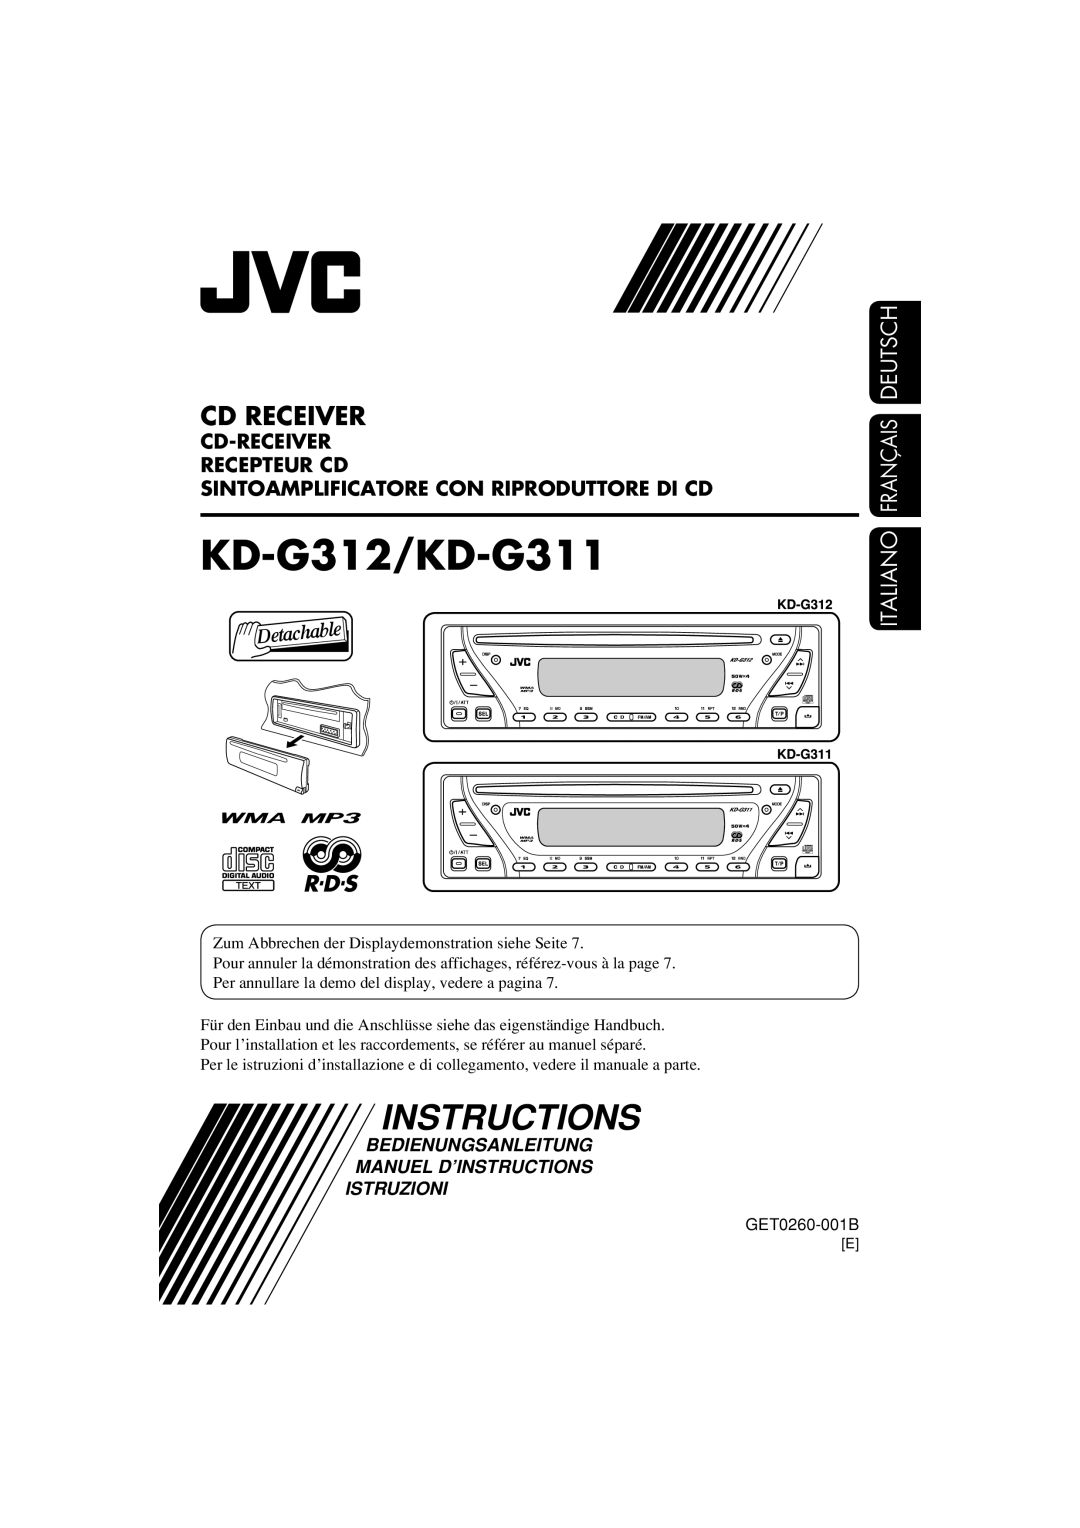 Panasonic manual Cd Receiver, Italiano Français Deutsch, Cd-Receiver Recepteur Cd, KD-G312/KD-G311, Instructions 